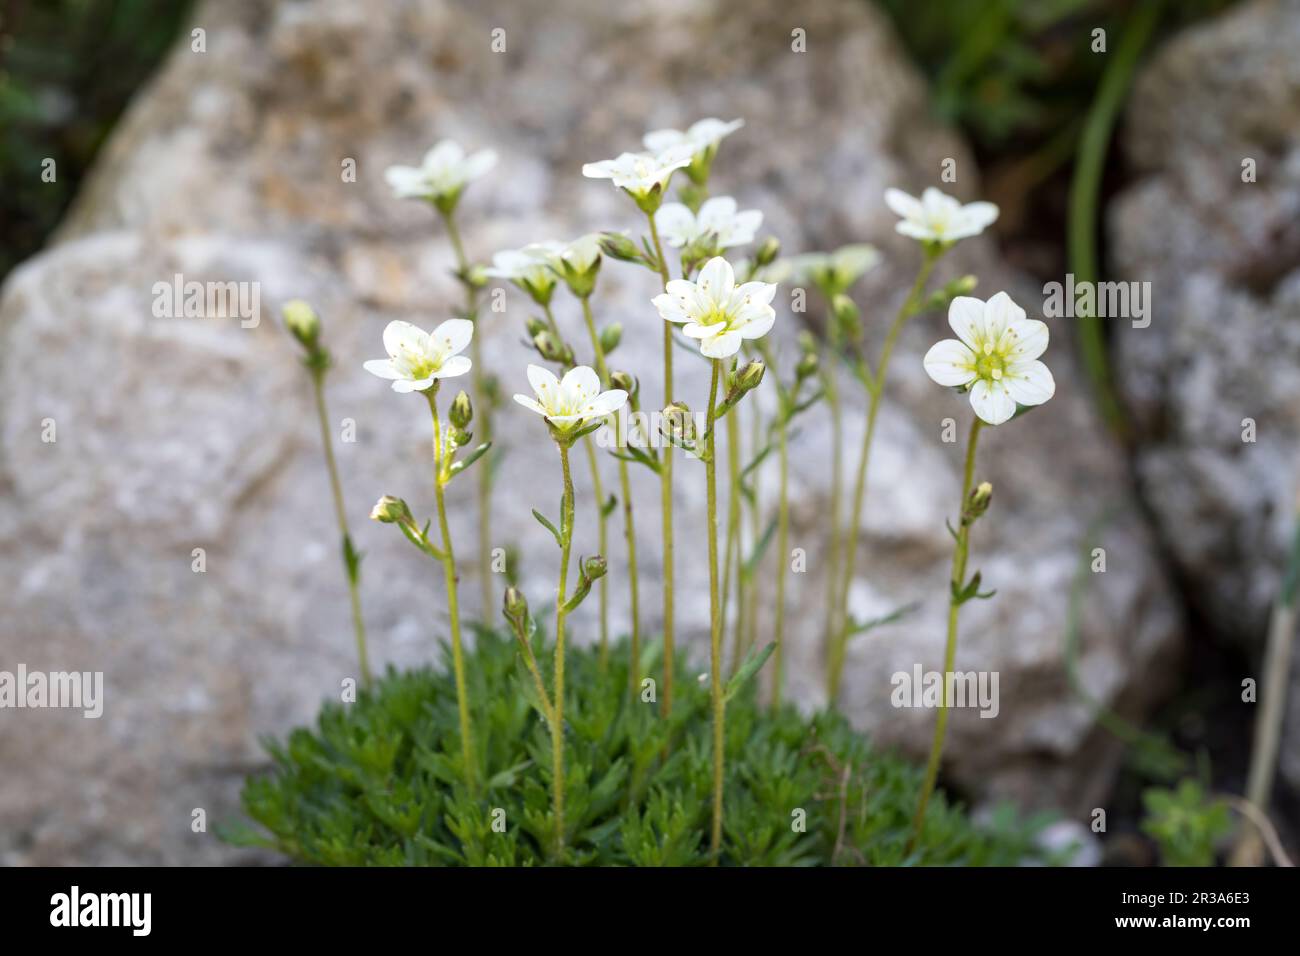 Moss saxifrage (Saxifraga arendsii) in the garden Stock Photo